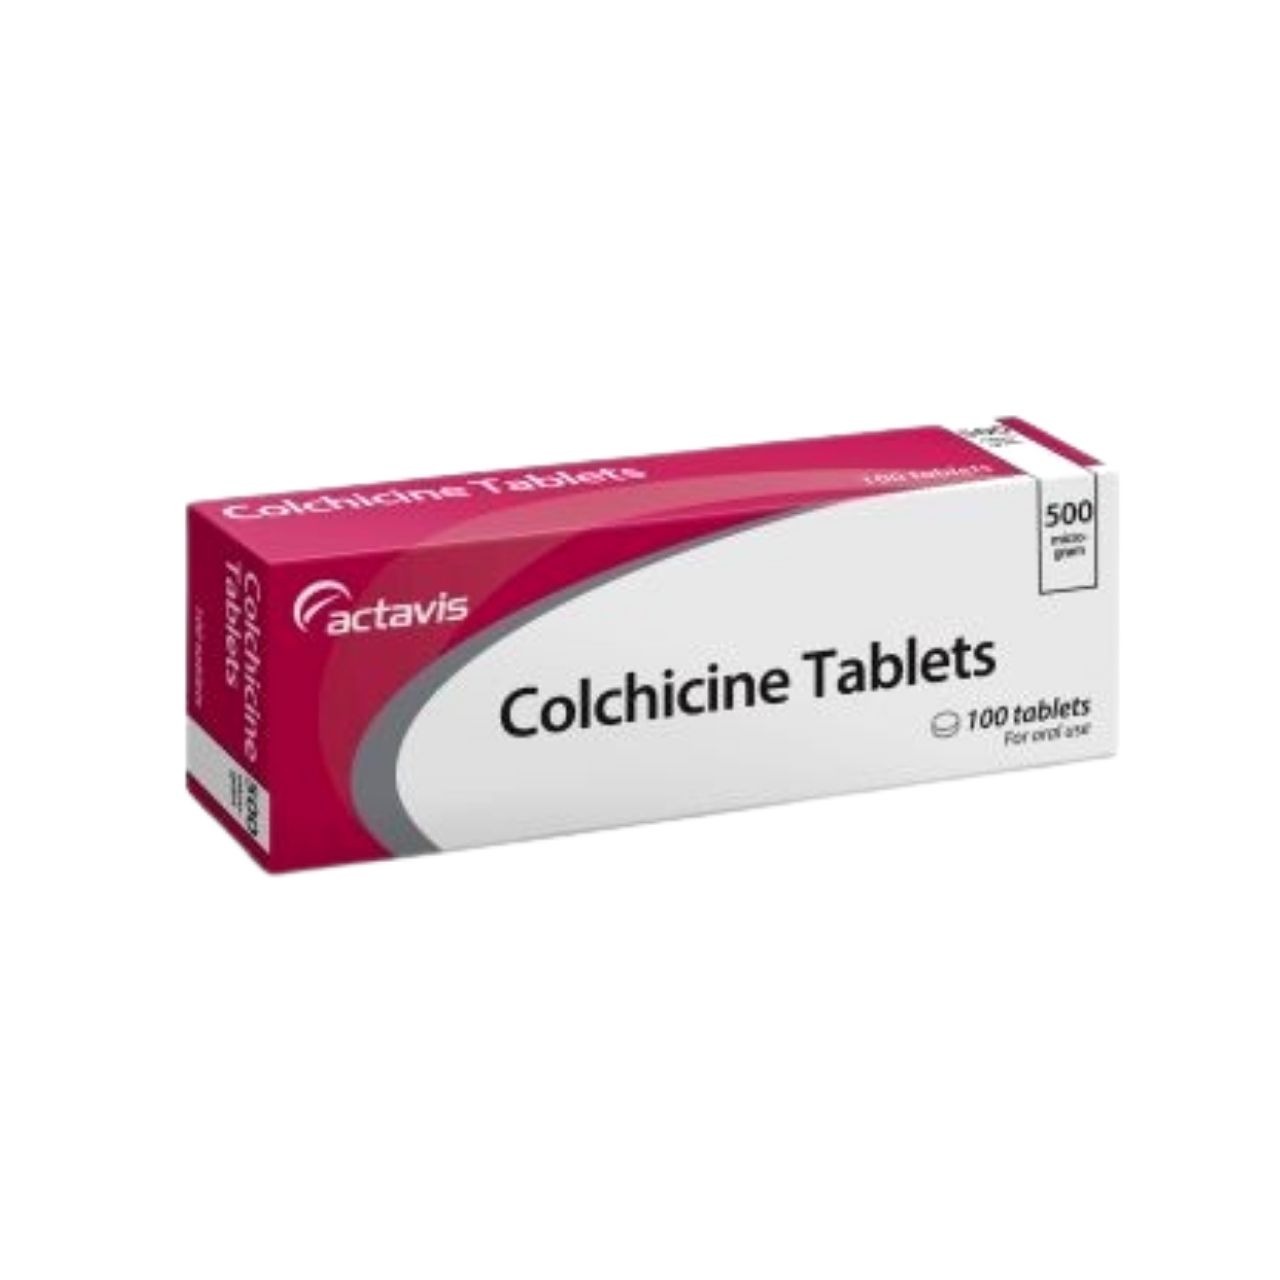 Colchicine - 500 microgram tablets